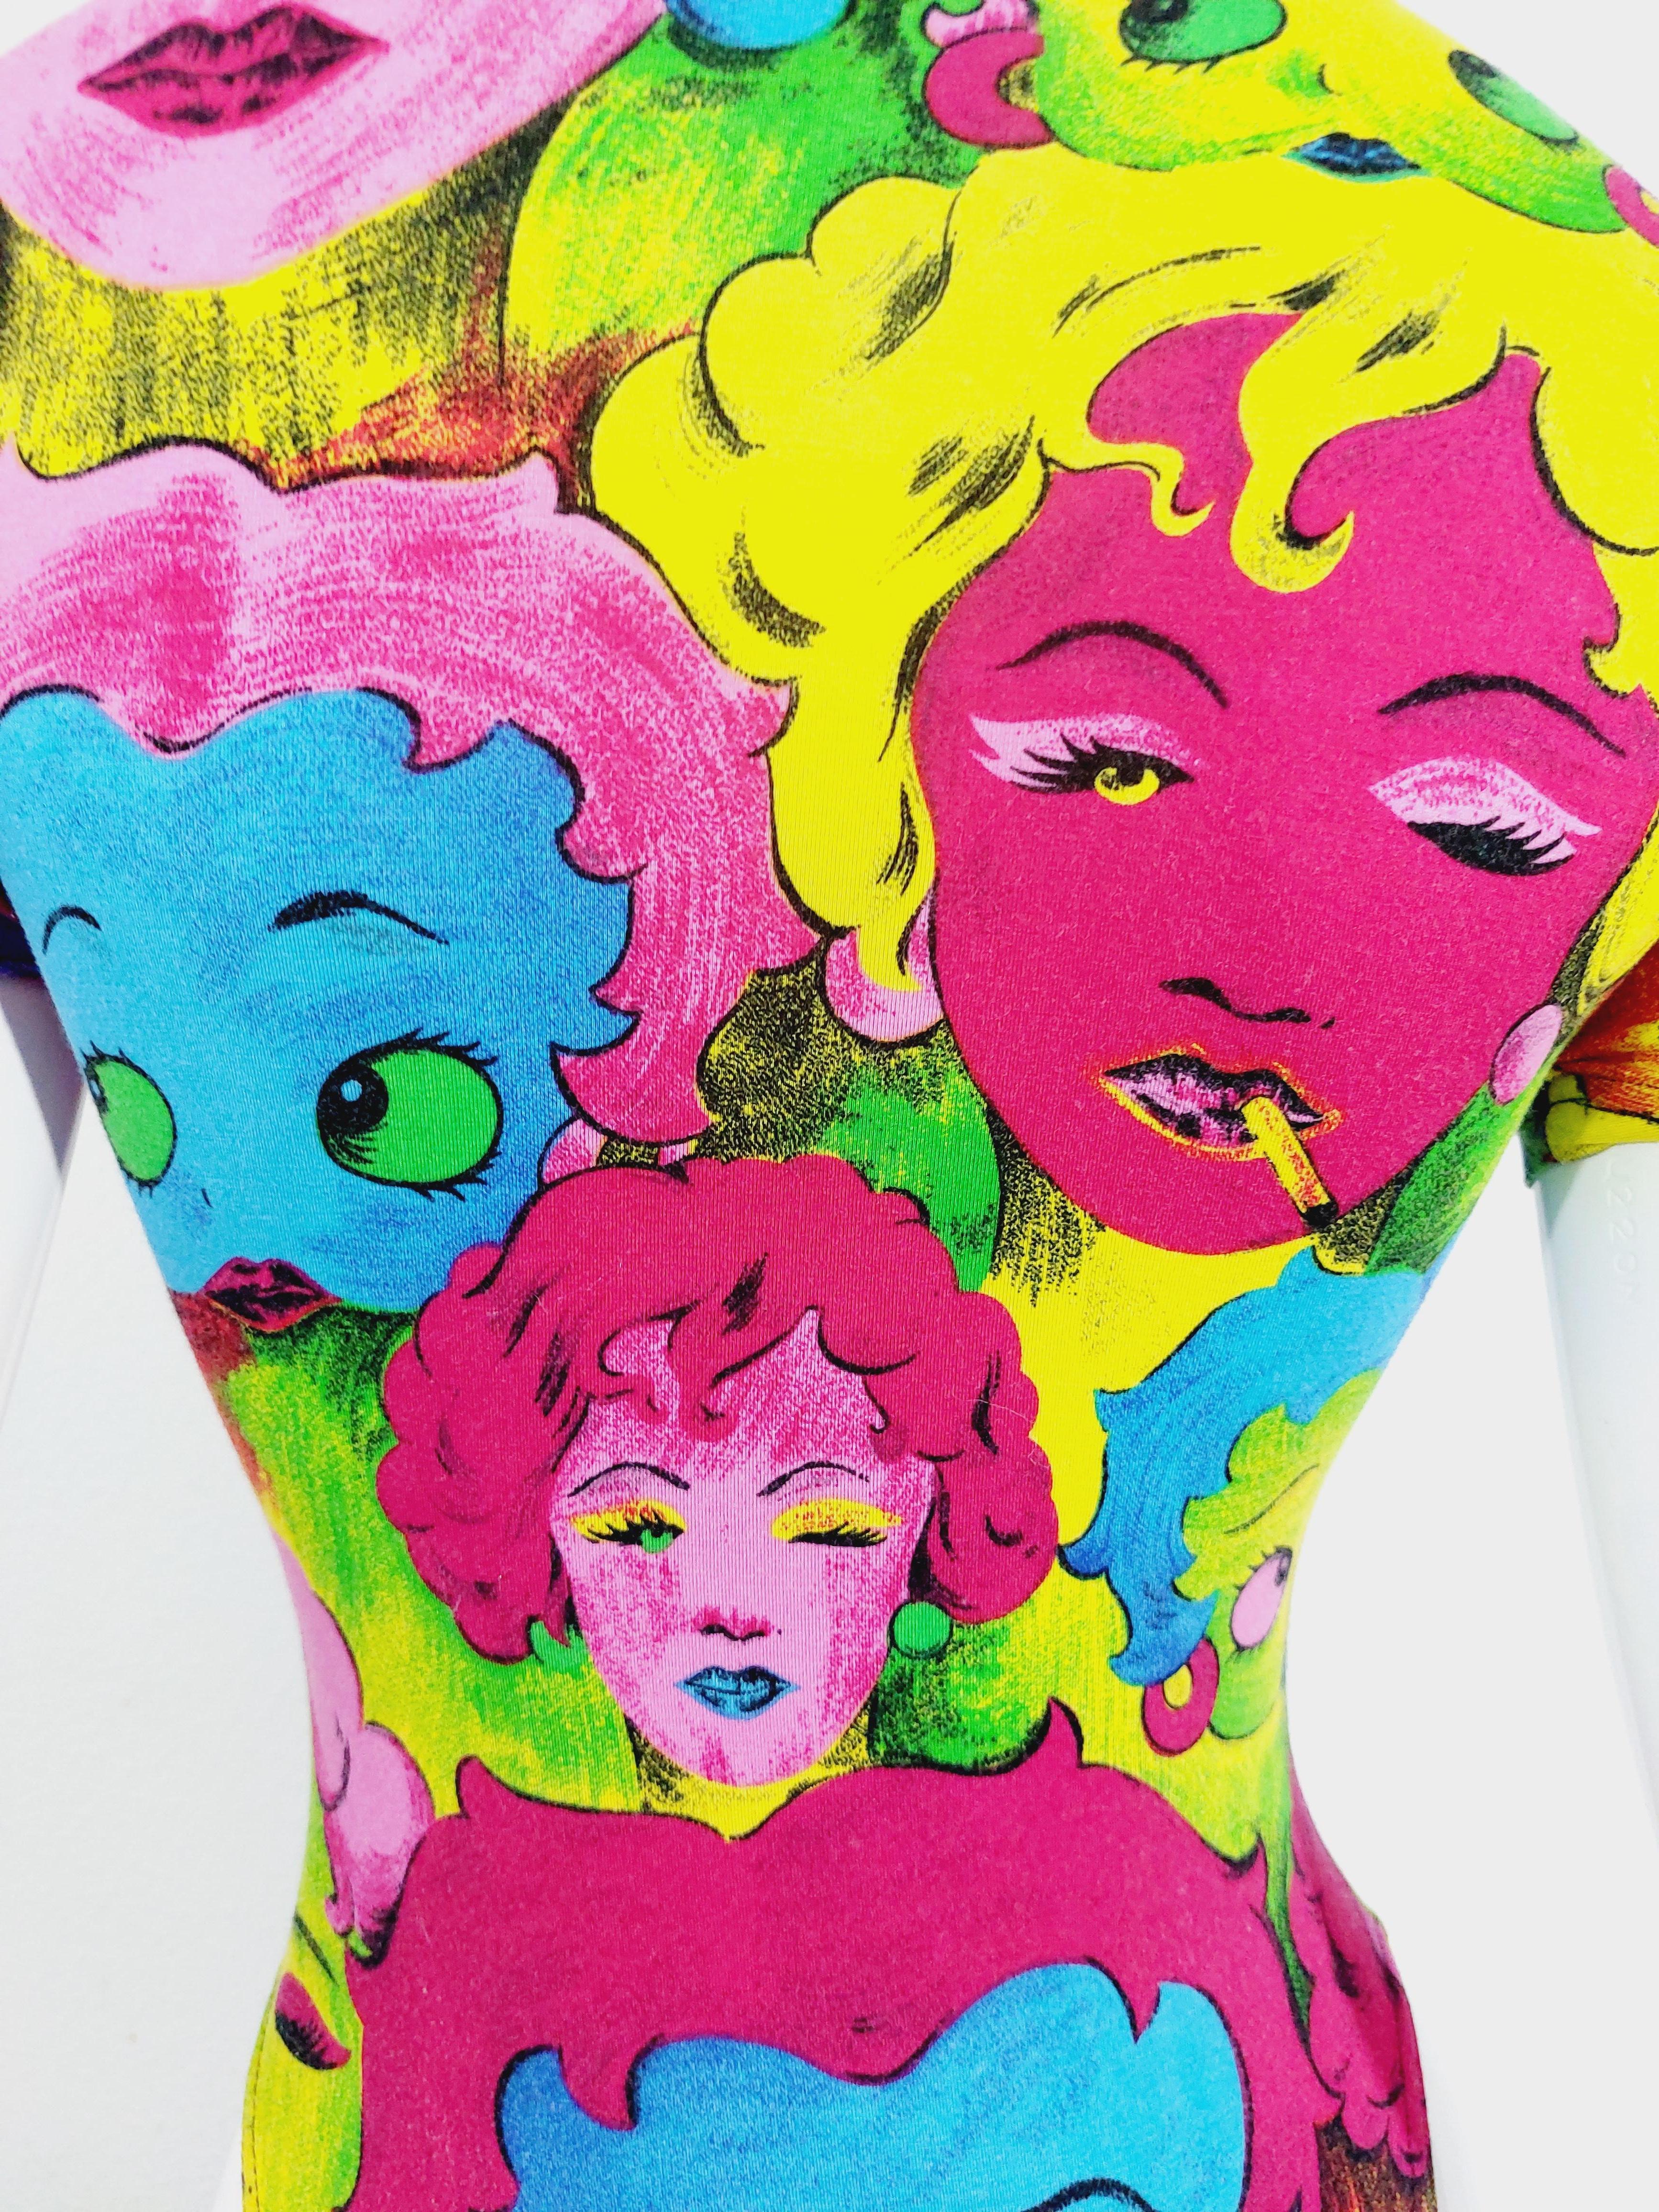 GIANNI VERSACE Andy Warhol Pop Art Marilyn Monroe Betty Boop SS91 Bodyuit Body For Sale 3